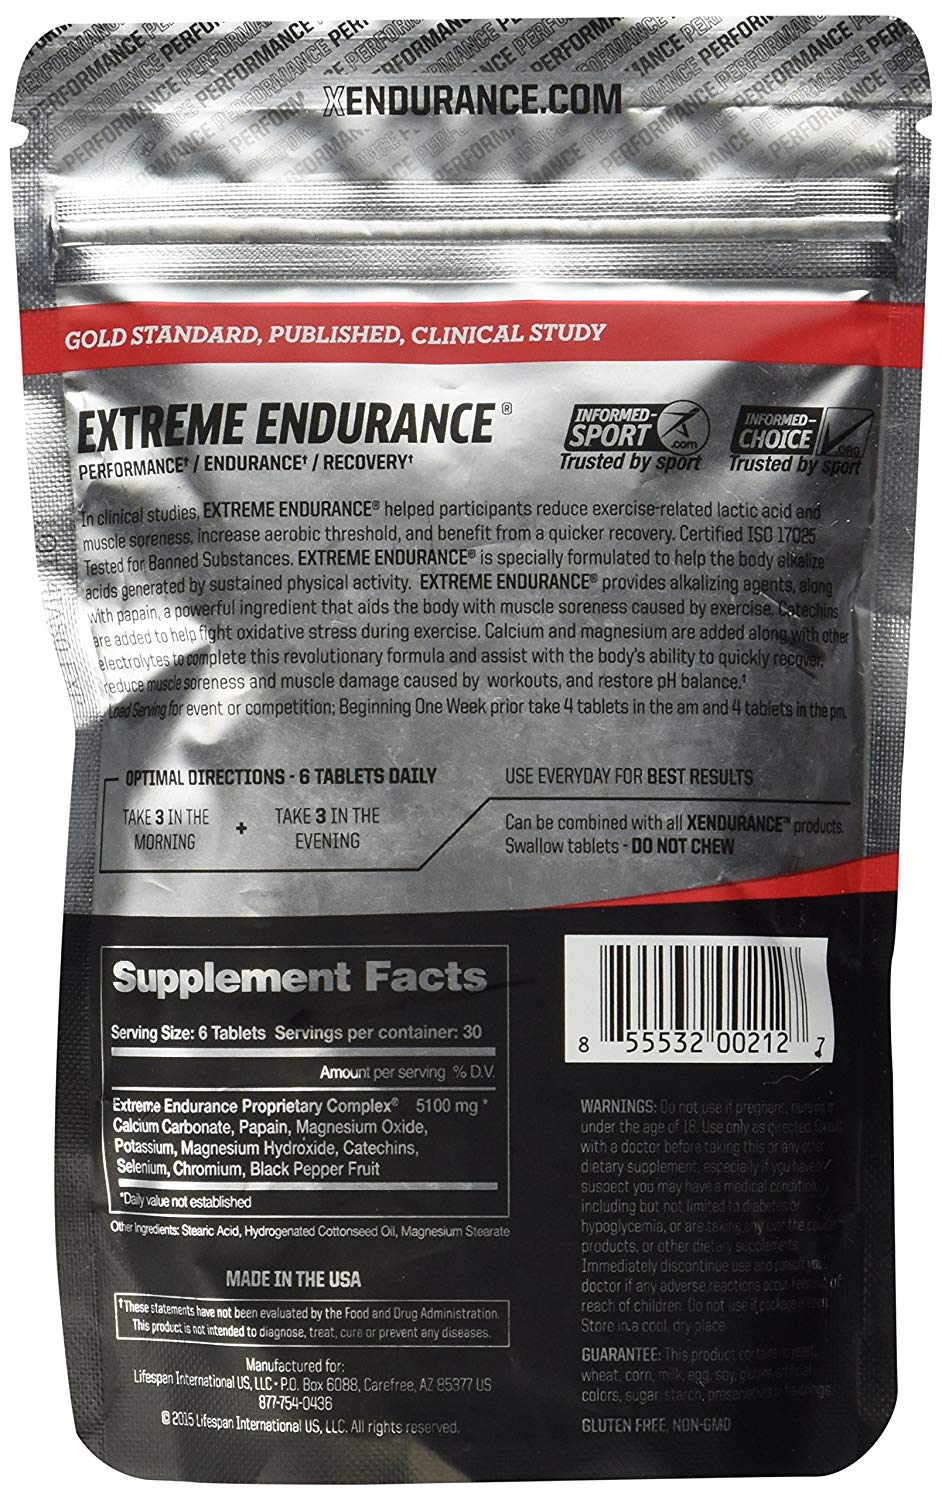 Extreme Endurance Xendurance, Premium Lactic Acid Buffer